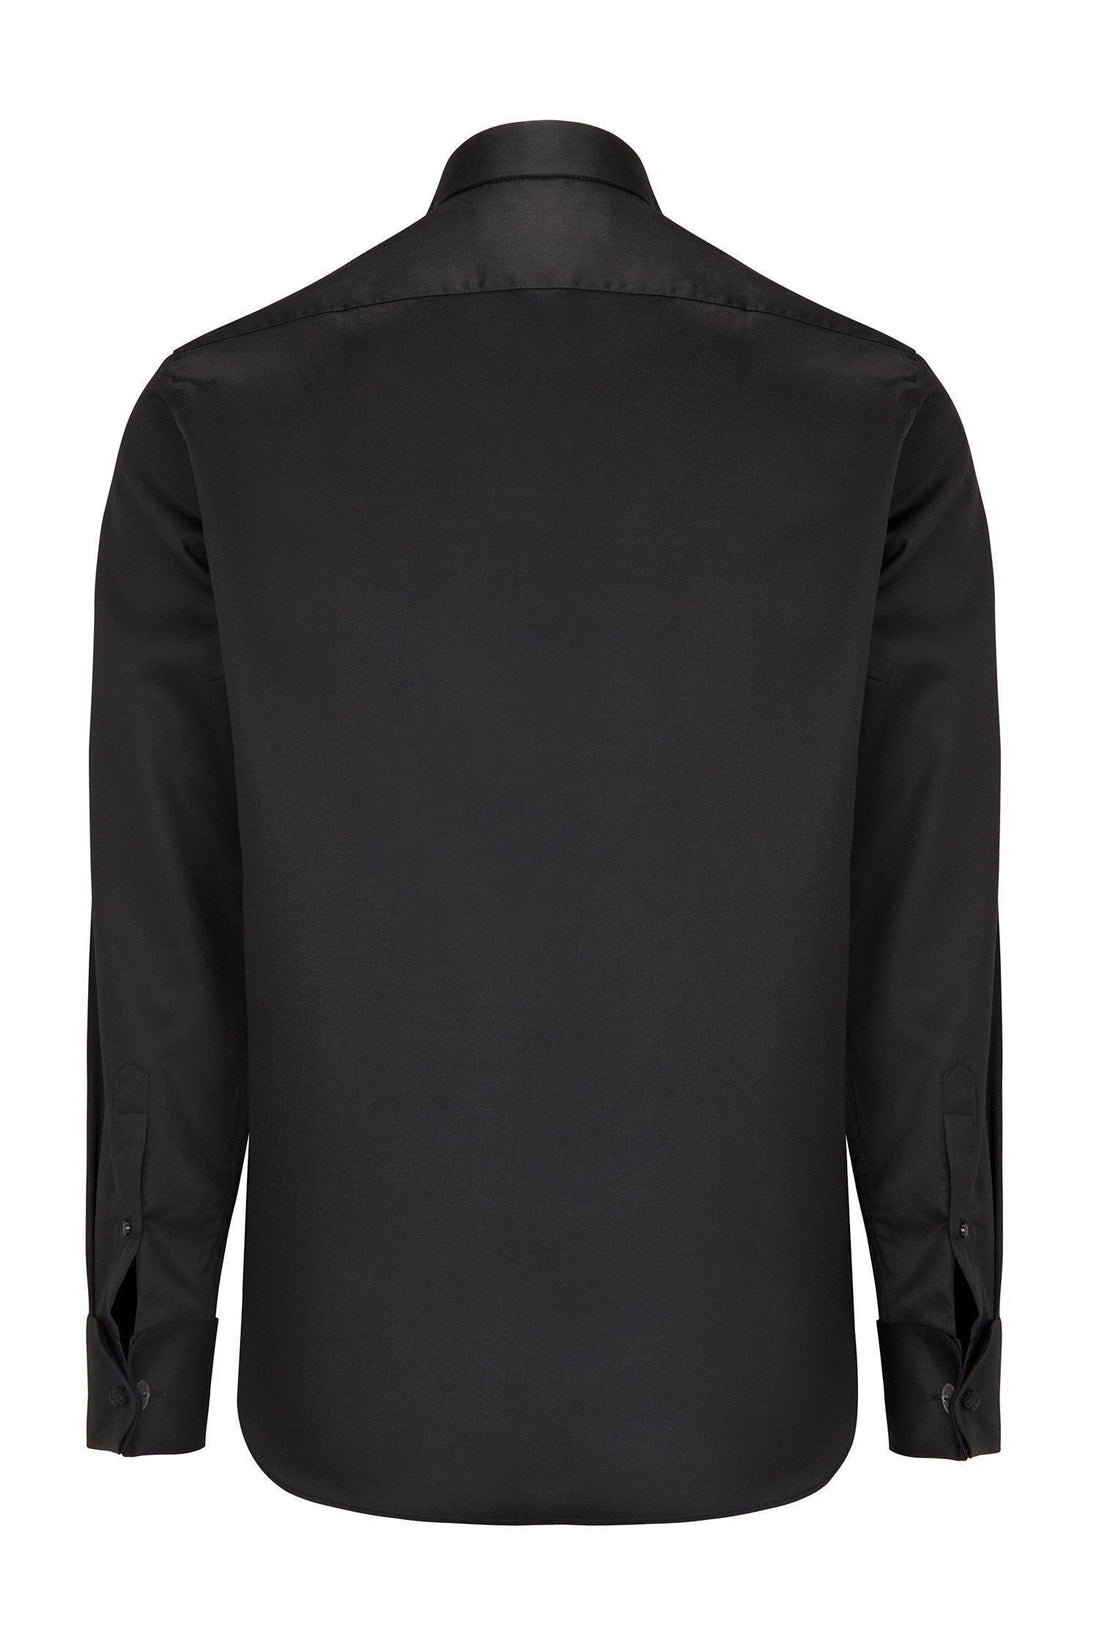 Lurex Paneled Spread Collar Shirt - BLACK RED - Ron Tomson